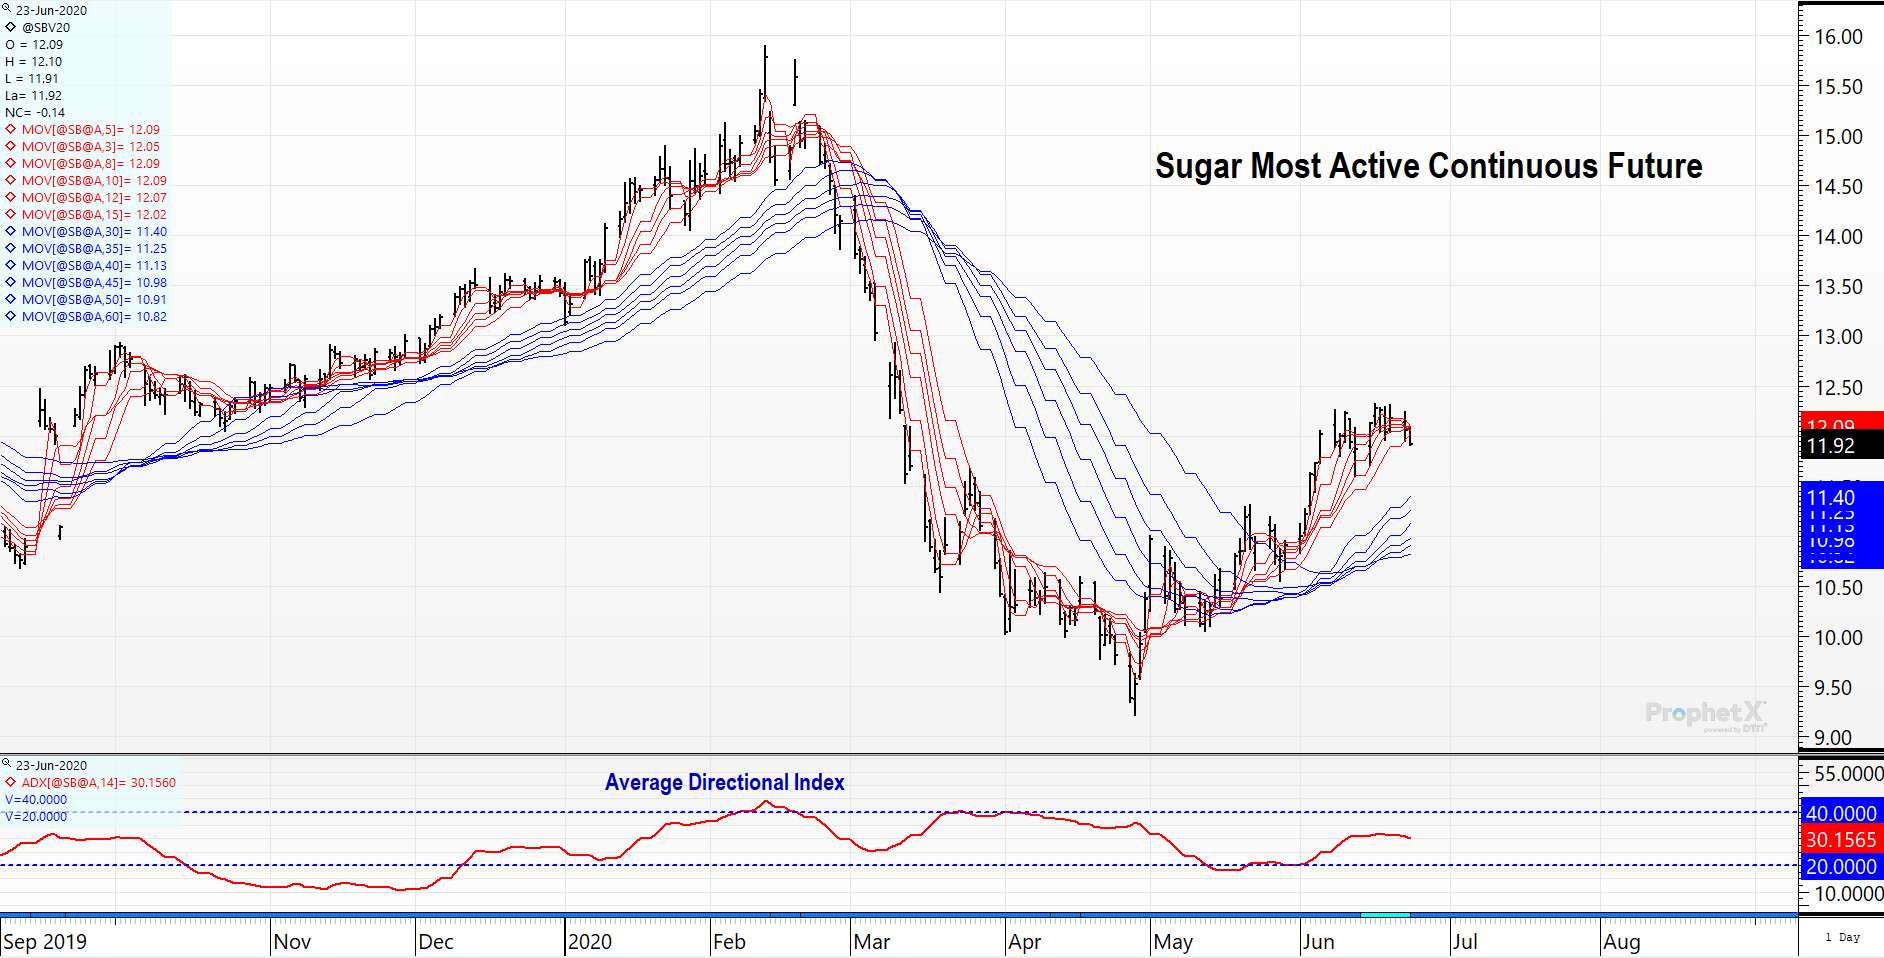 Sugar Futures Moving Average Series